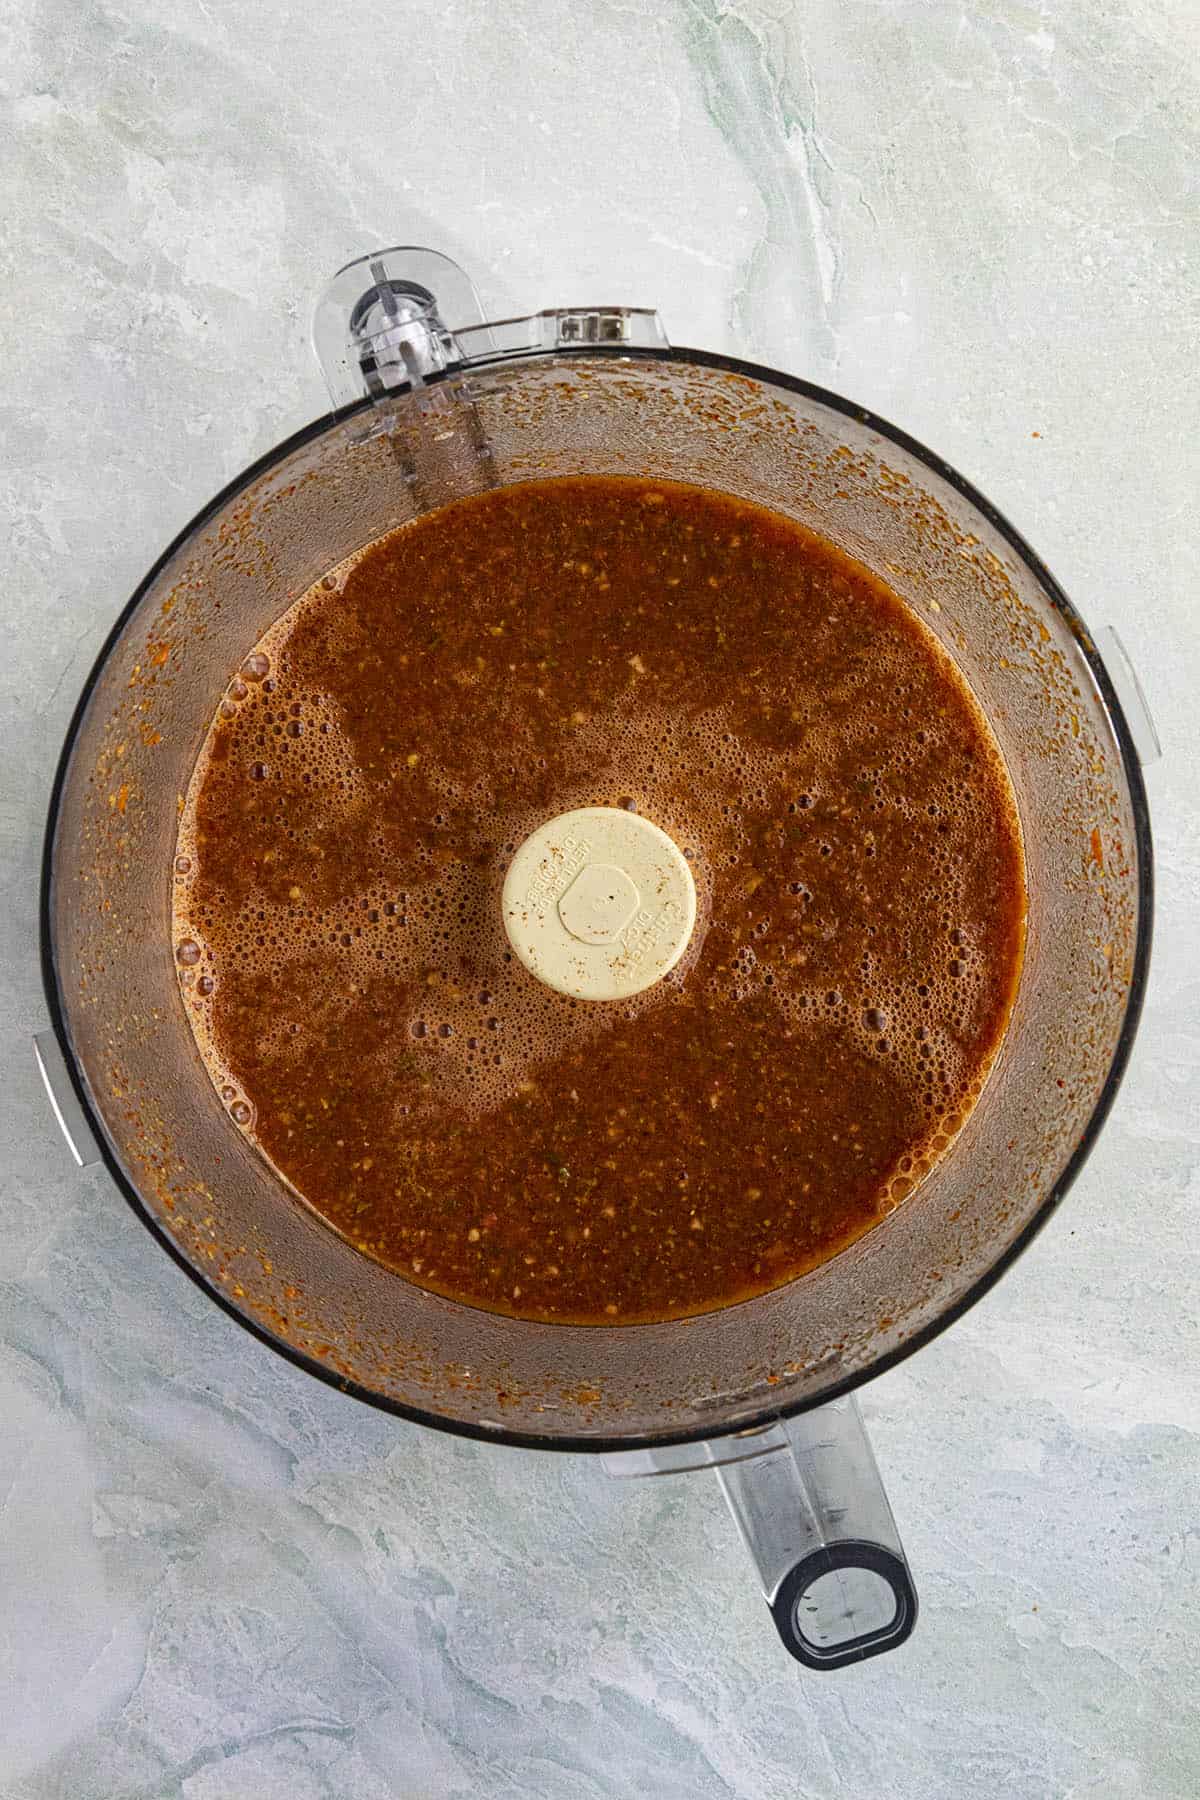 Sauce in a blender for making Sopa de Fideo